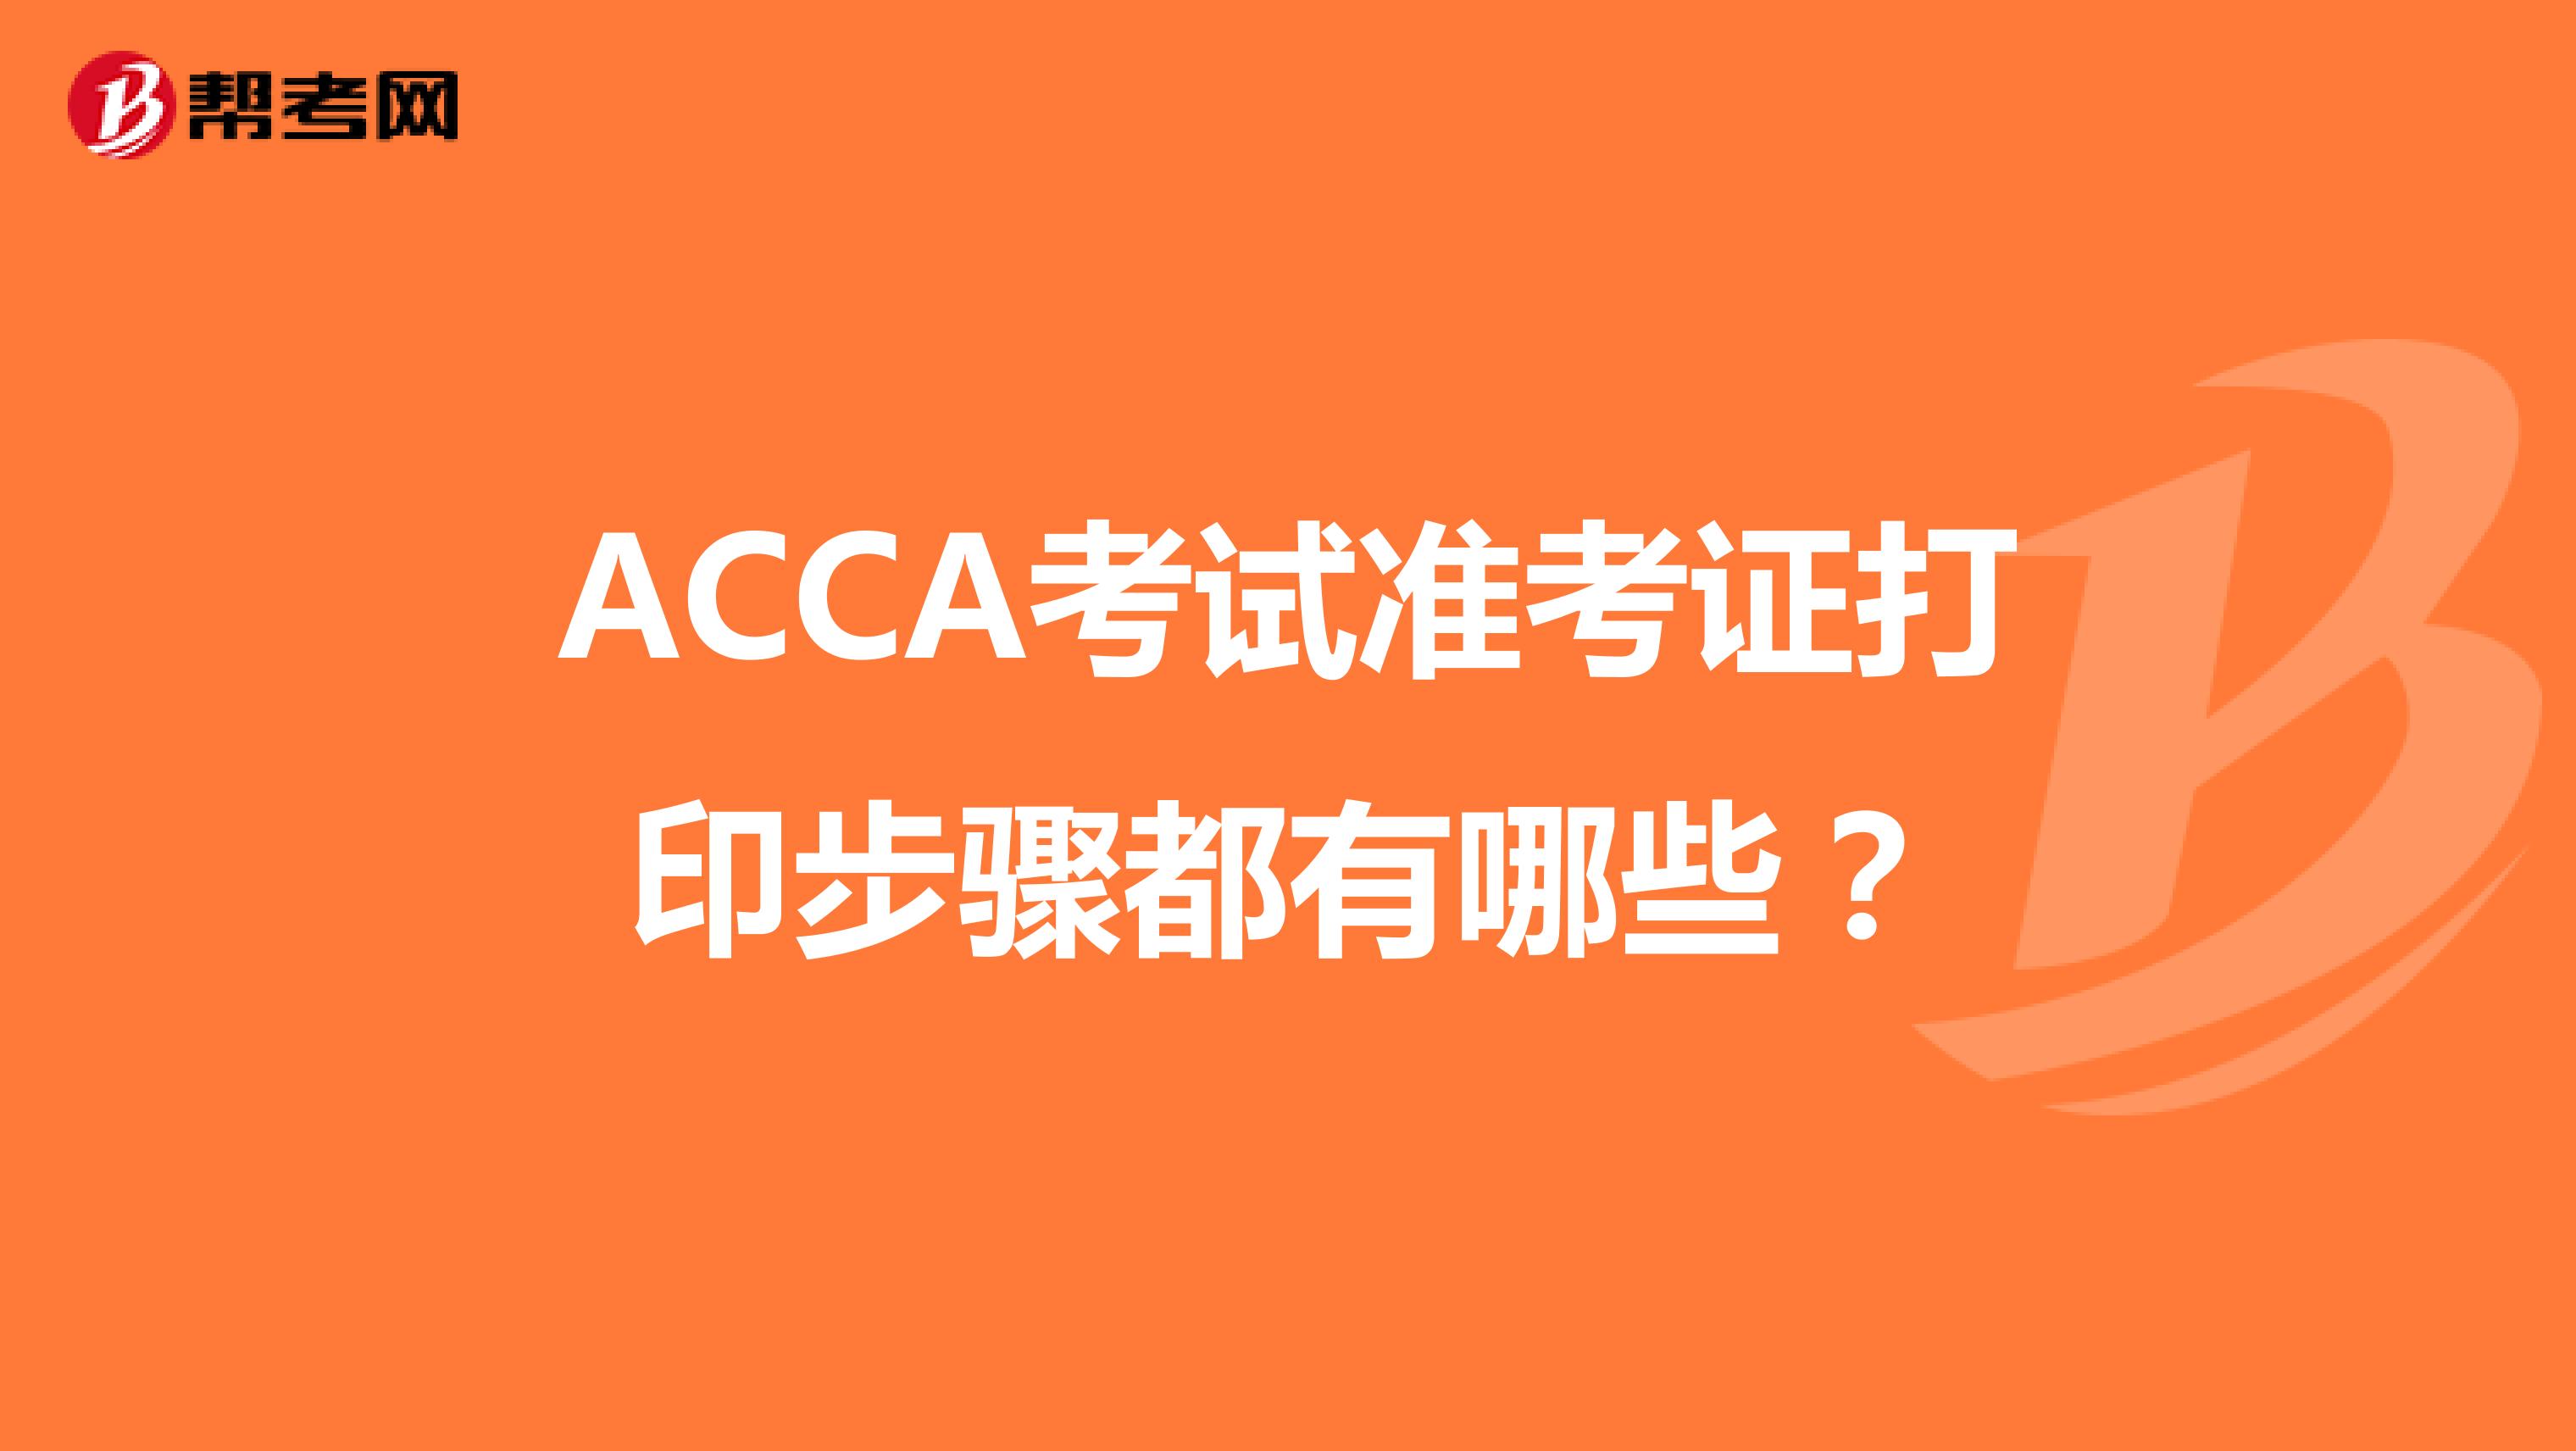 ACCA考试准考证打印步骤都有哪些？